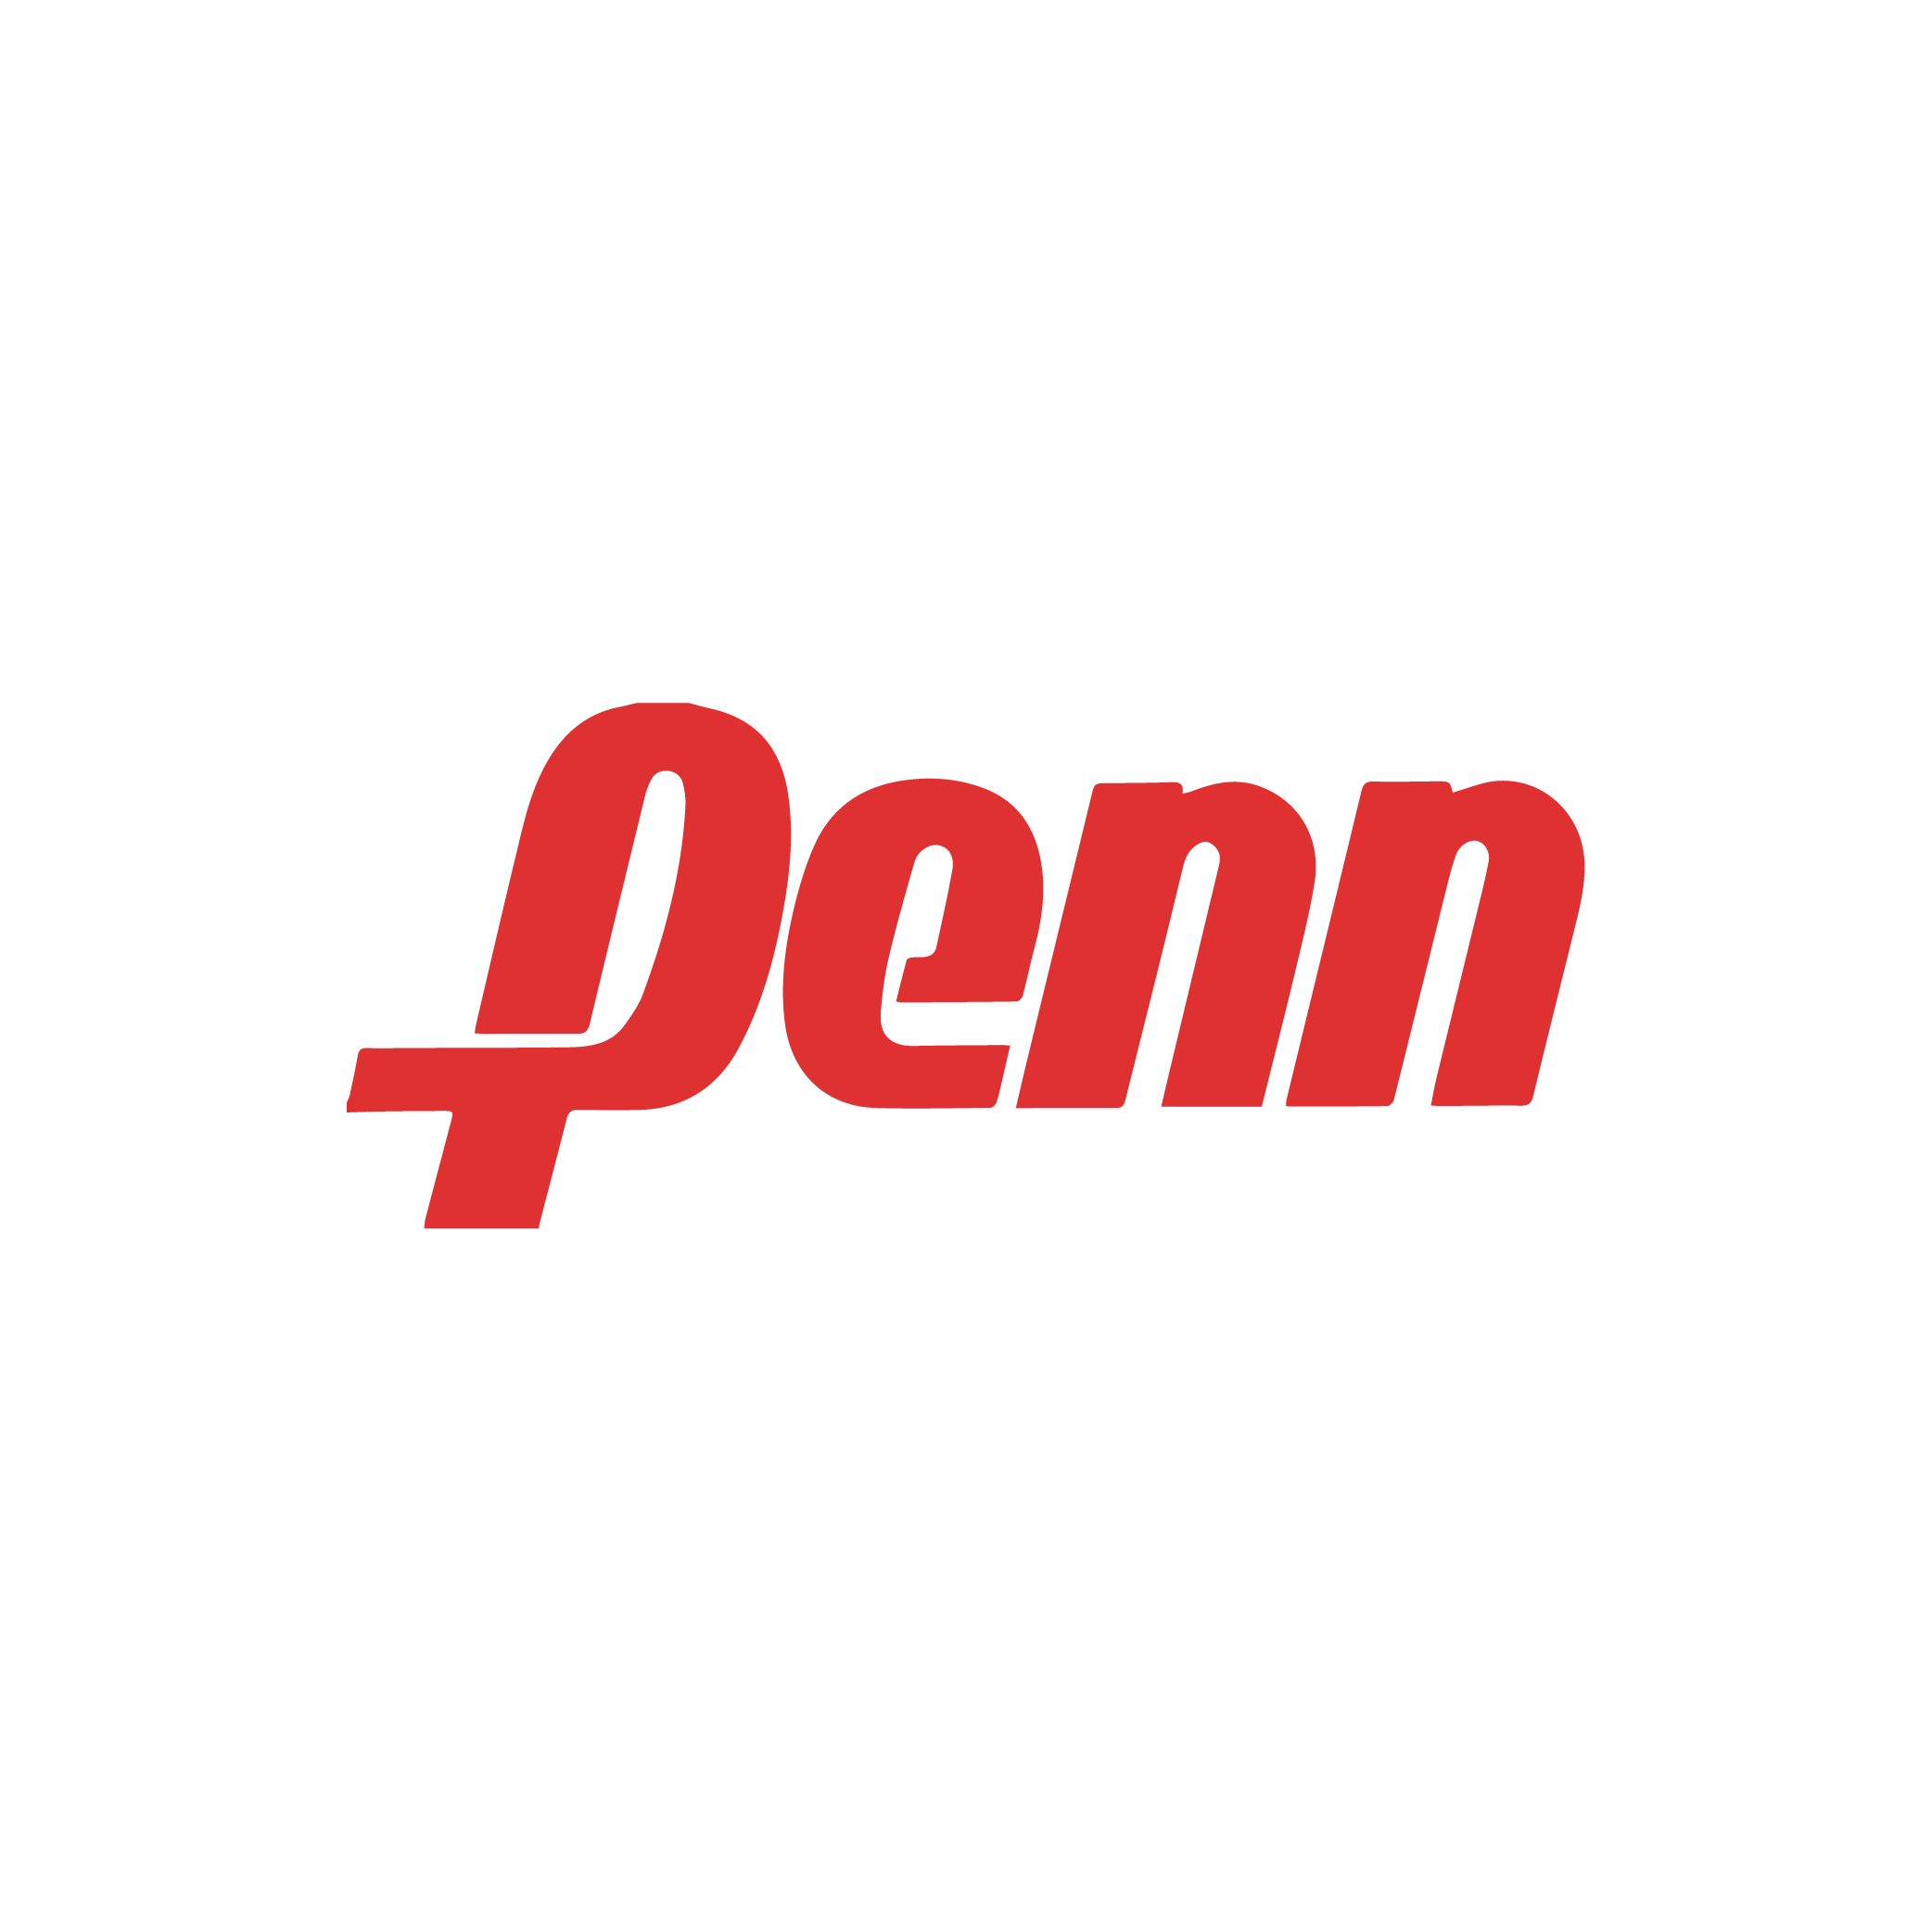 Penn-01.png